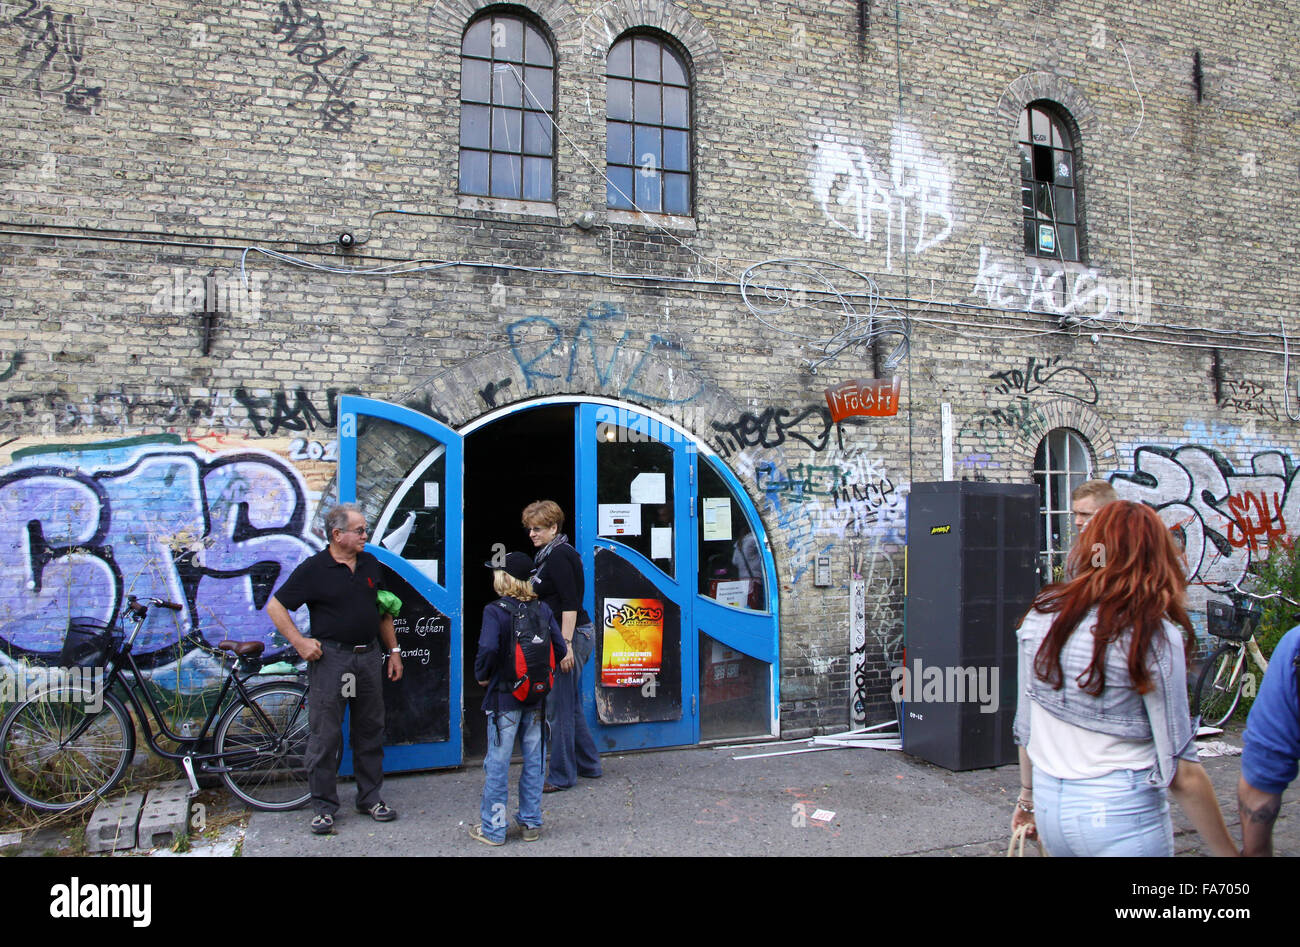 COPENHAGEN, DENMARK - JULY 28, 2012: Christiania, also known as Freetown Christiania is a self-proclaimed autonomous neighbourho Stock Photo